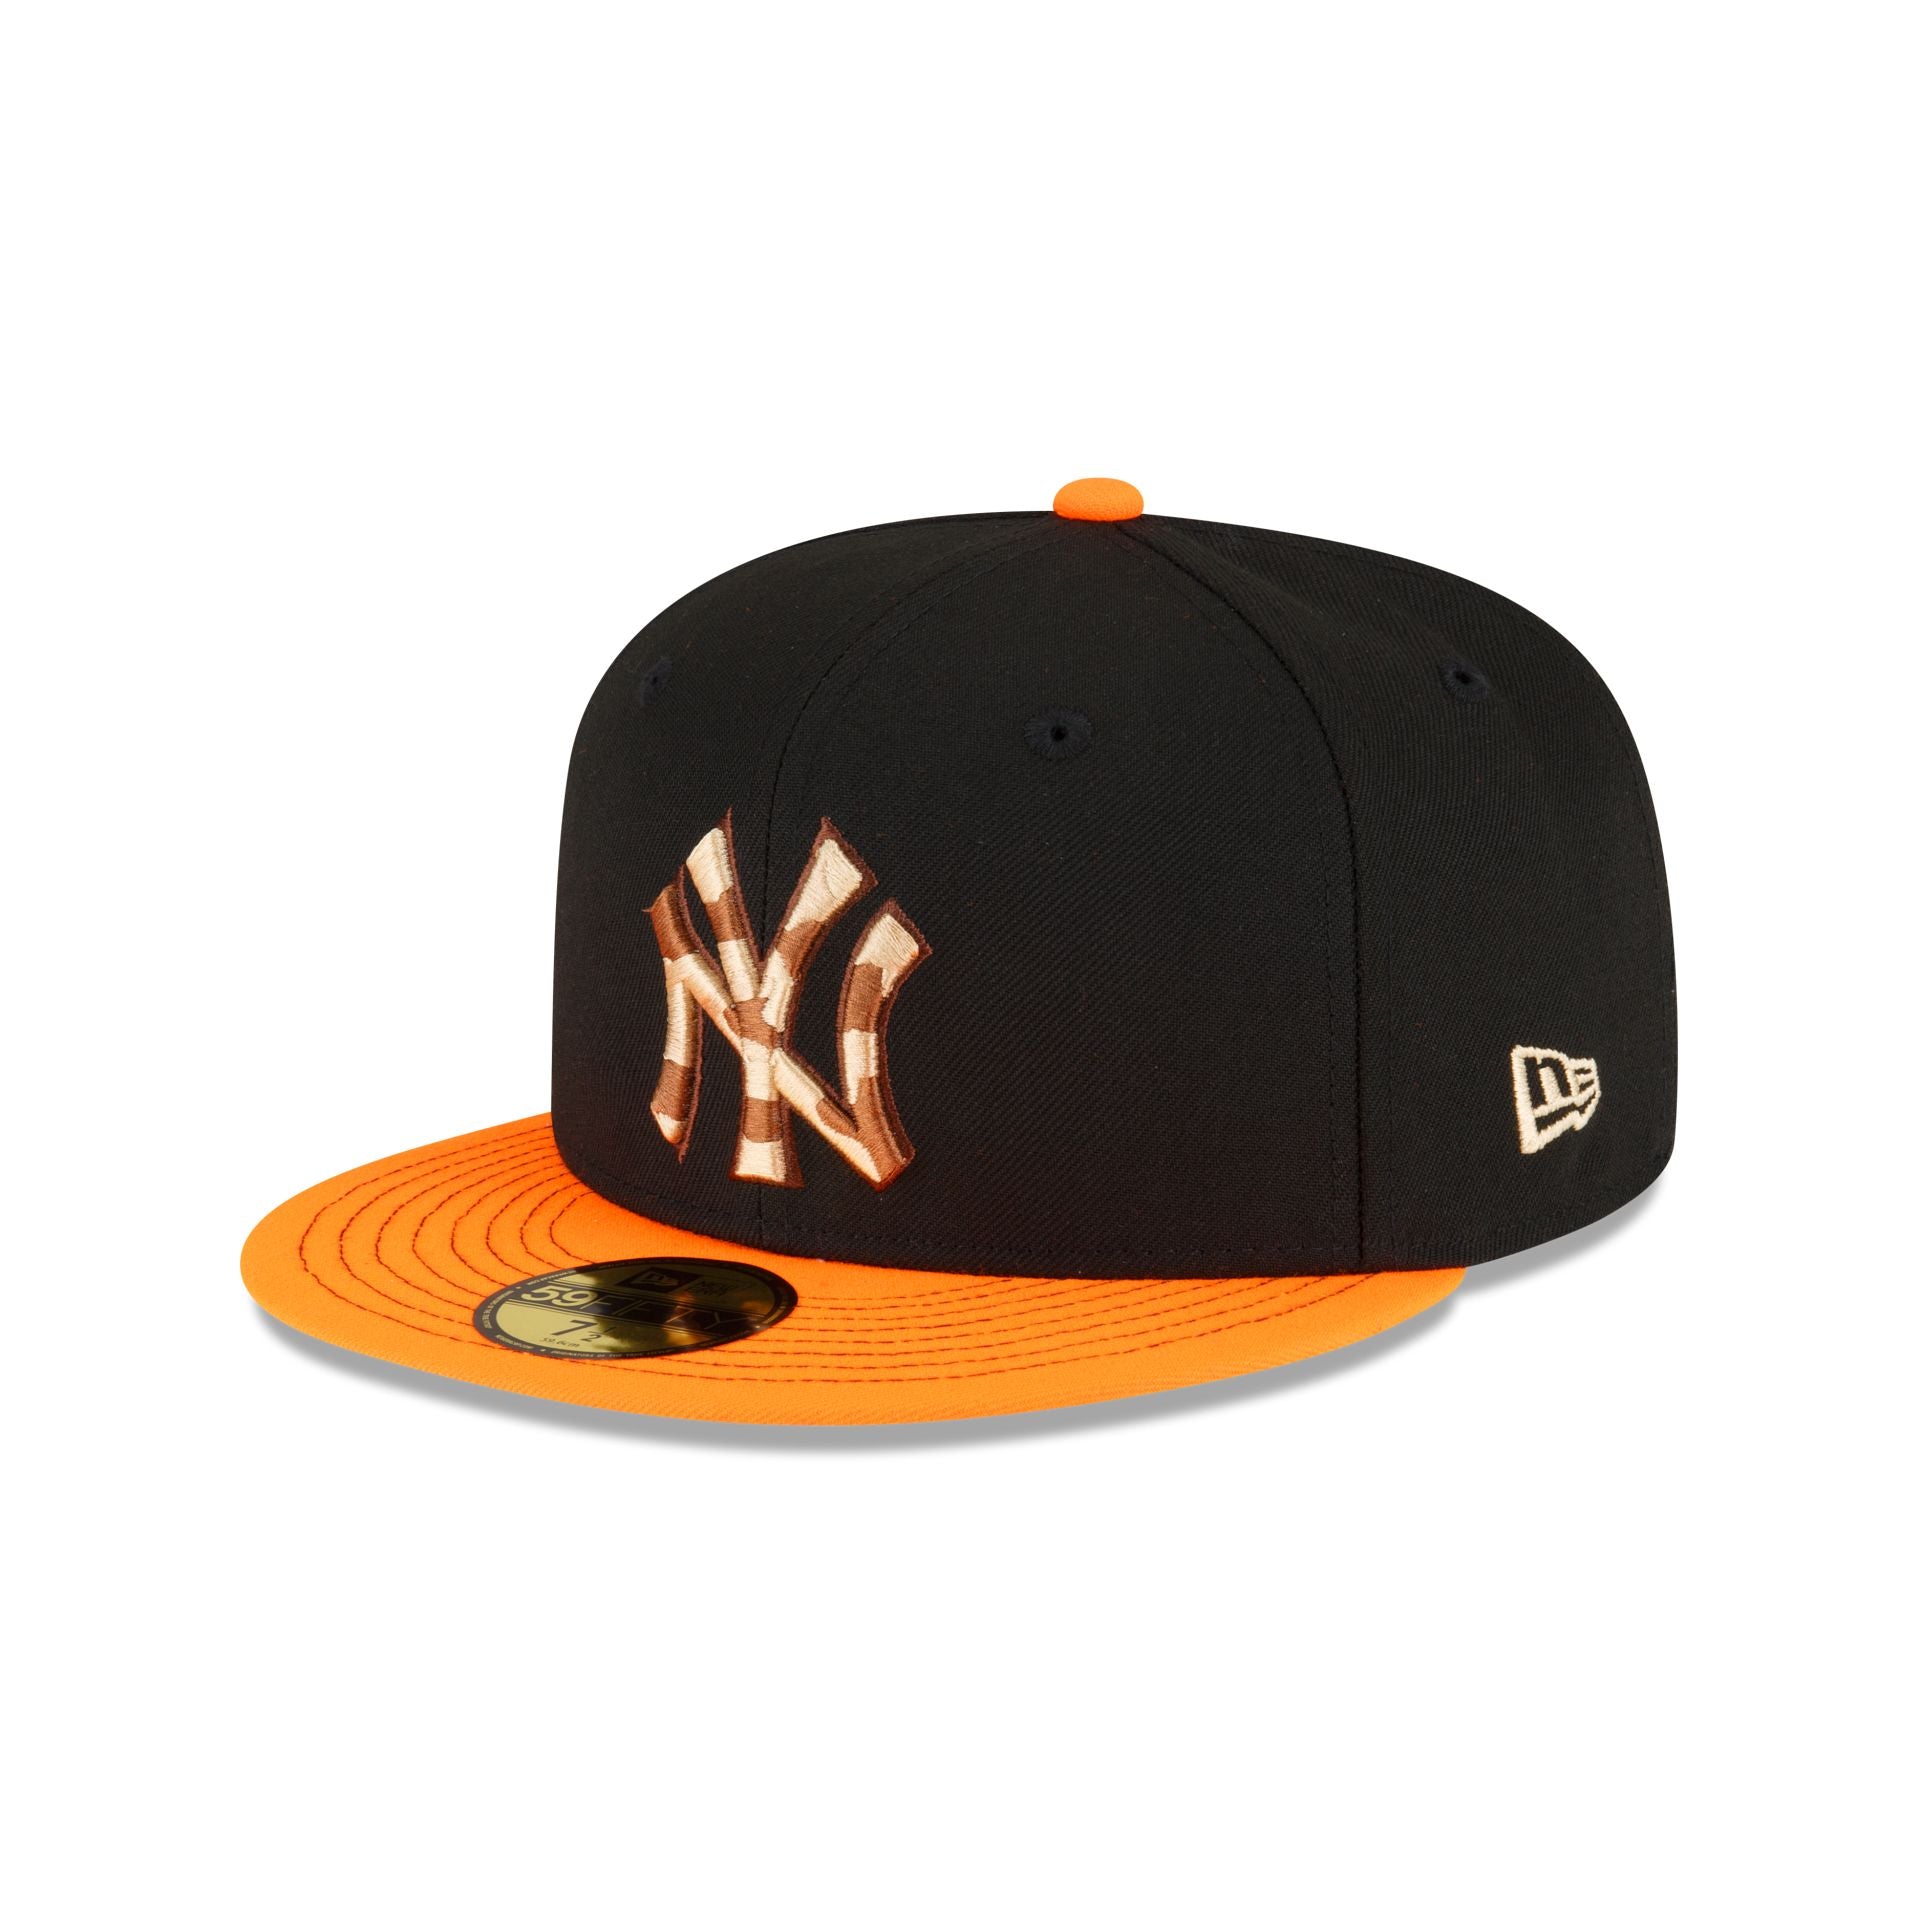 Just Caps Orange Visor York New Cap – New Hat Fitted Yankees Era 59FIFTY